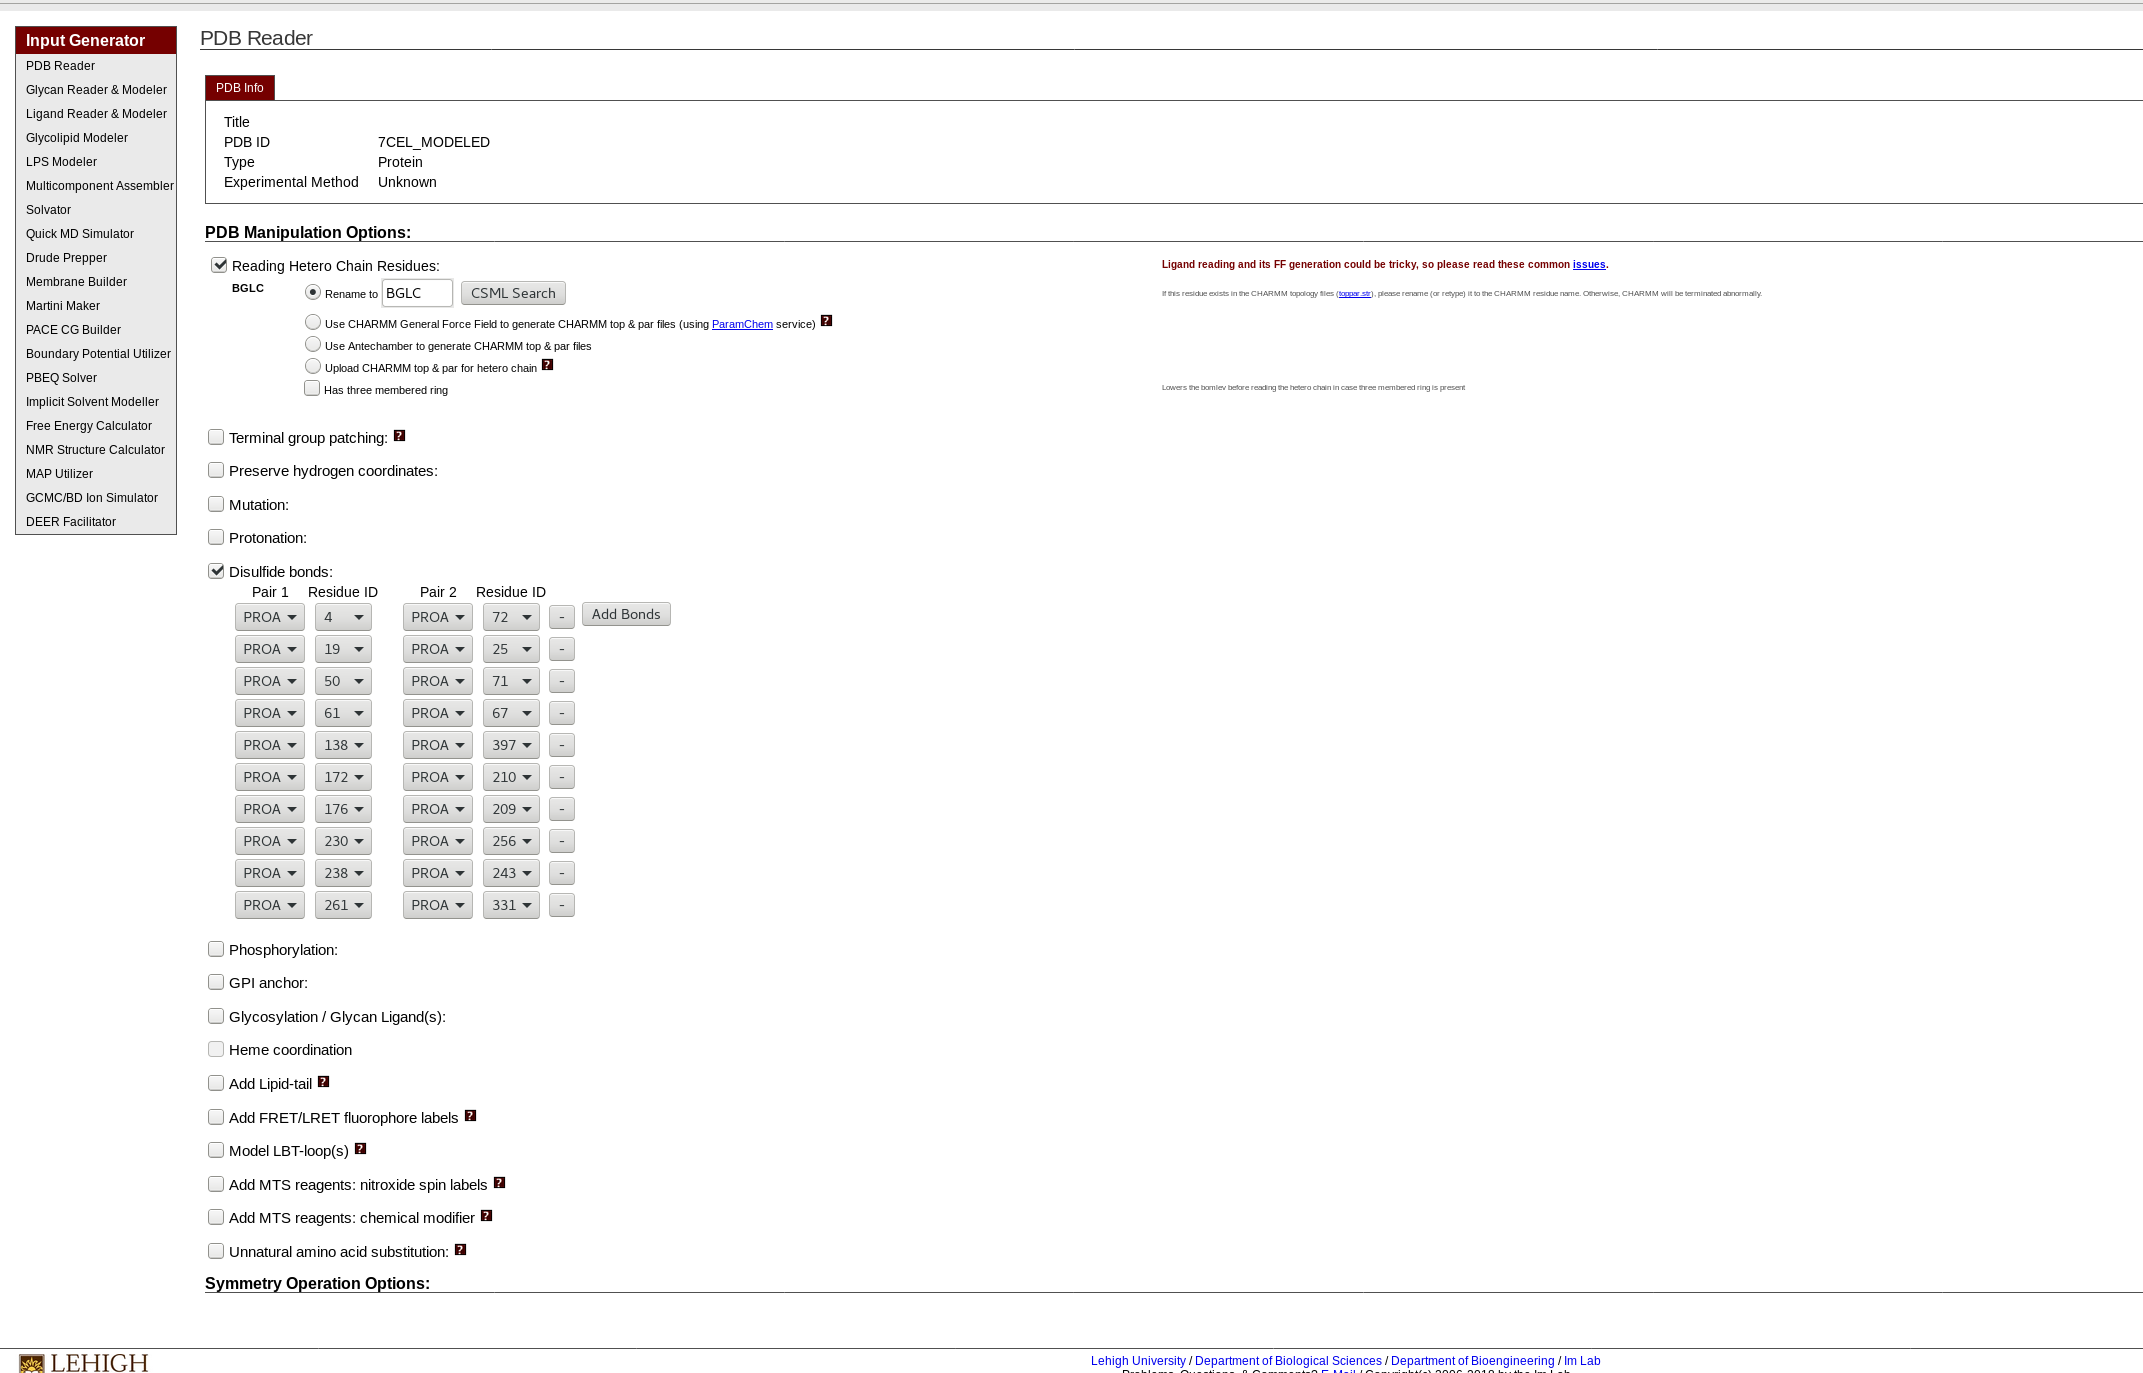 Snapshot of CHARMM-GUI renaming section. 